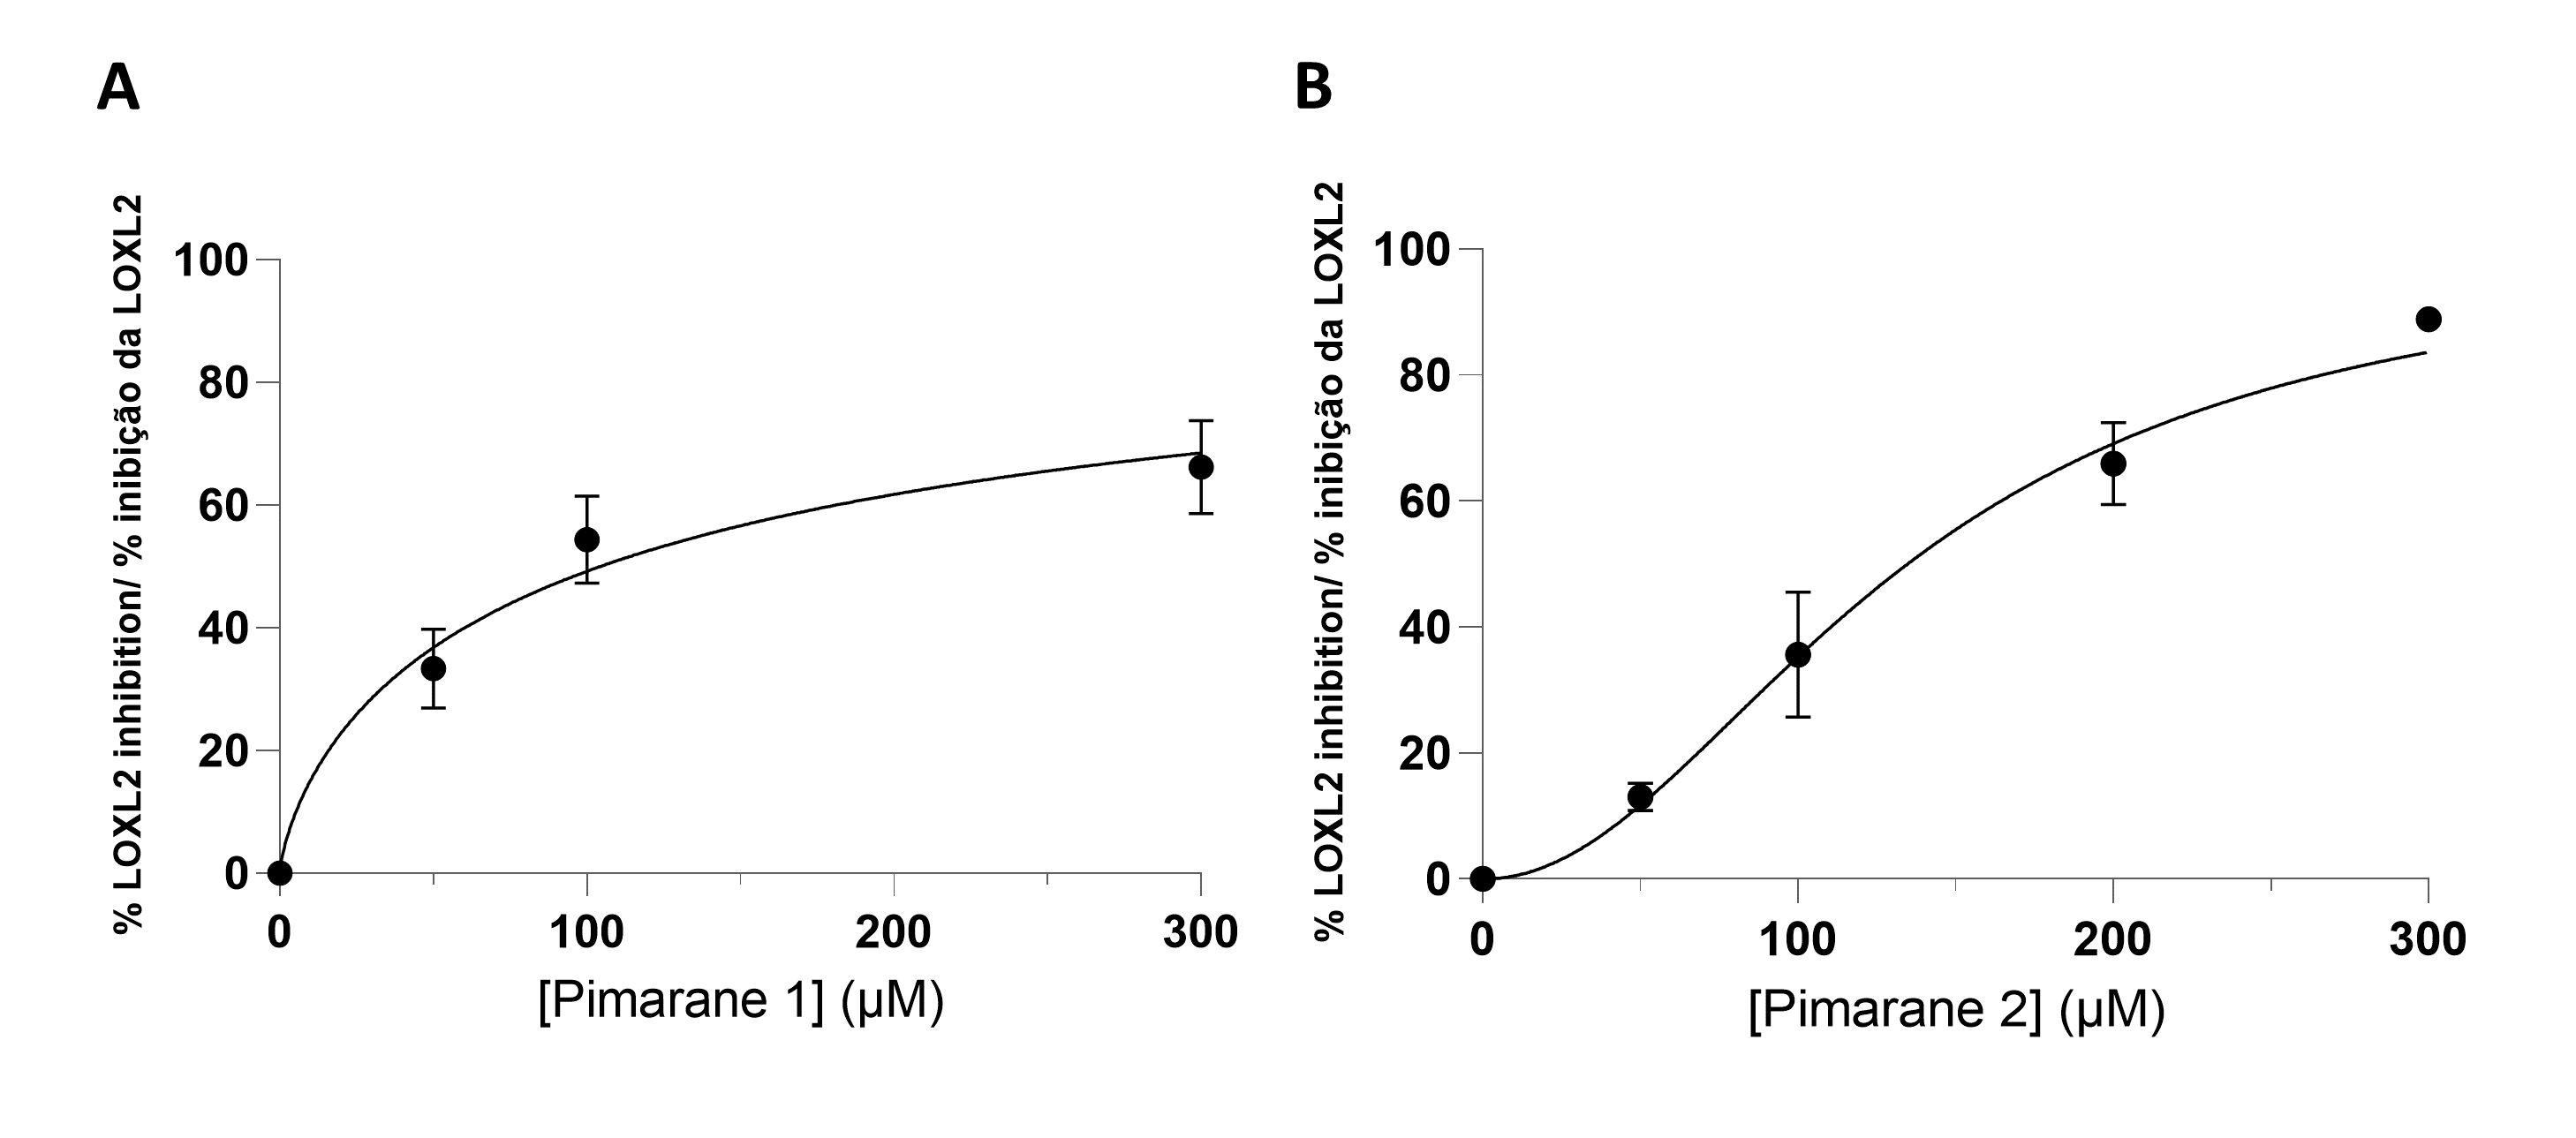 Figure 3 - LOXL2 inhibition assay, according to the Amplex Ultra Red technique. A) Pimarane 1. B) Pimarane 2.